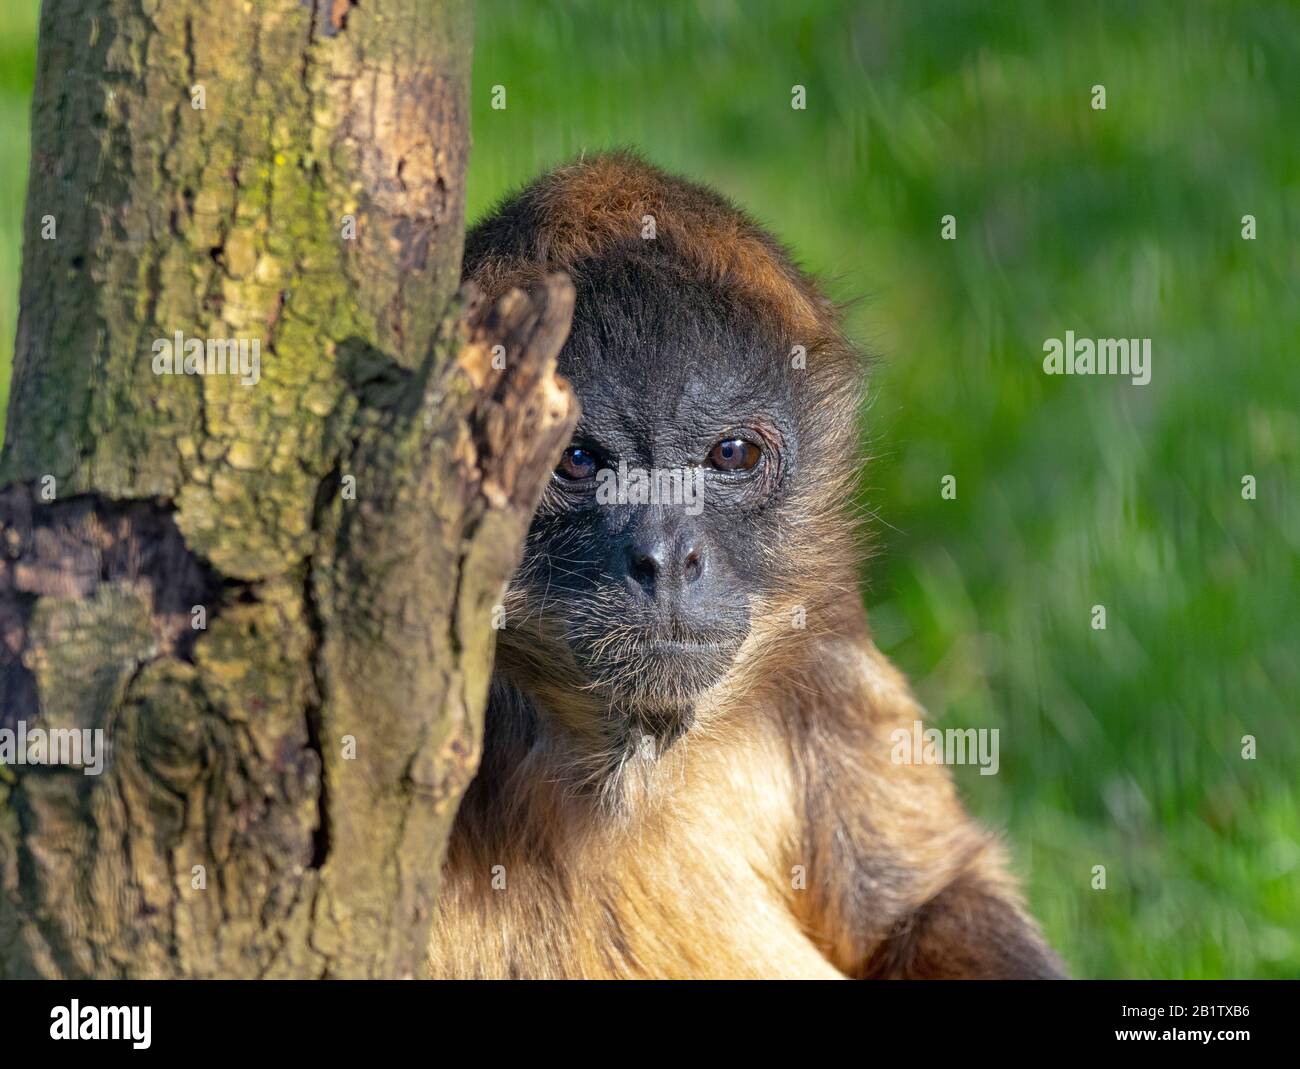 Black-handed spider monkey Ateles geoffroyi Stock Photo